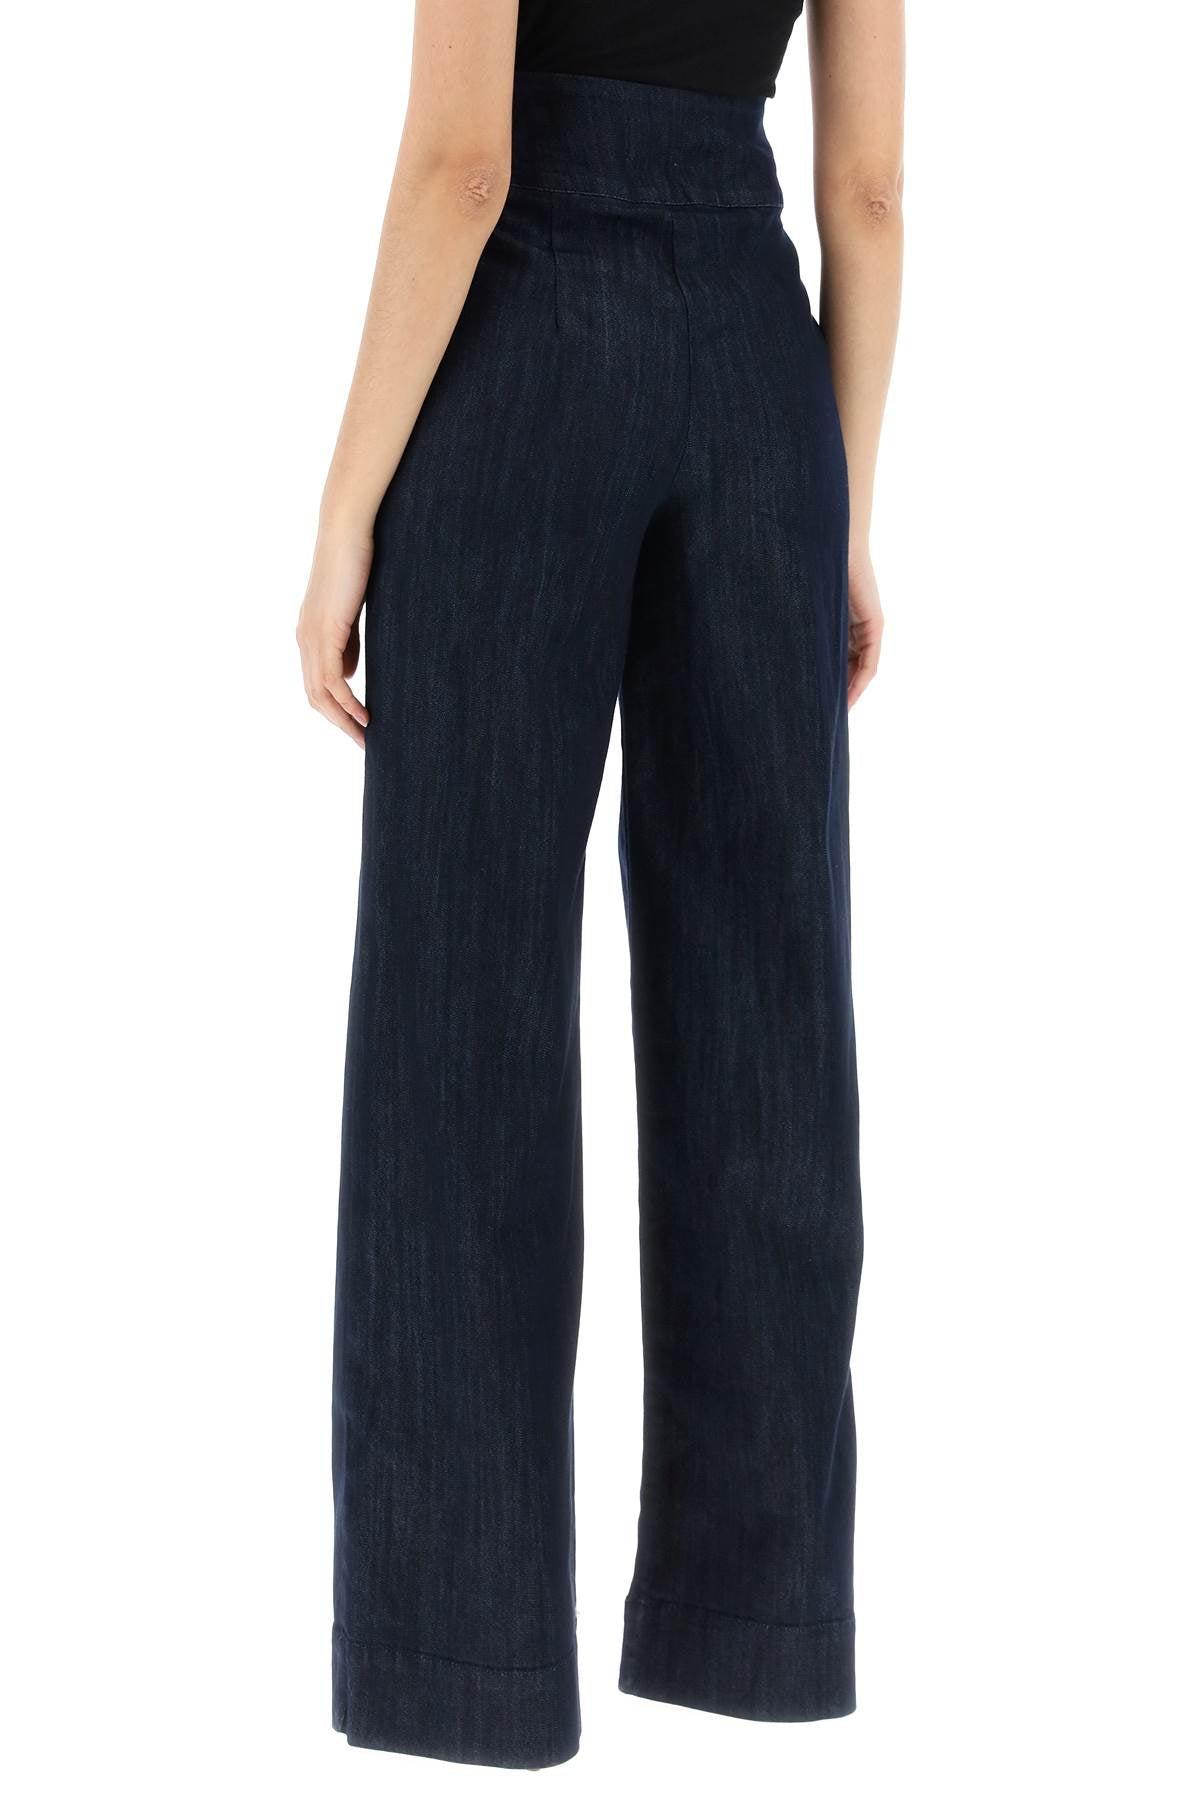 Mvp wardrobe tolone jeans-2